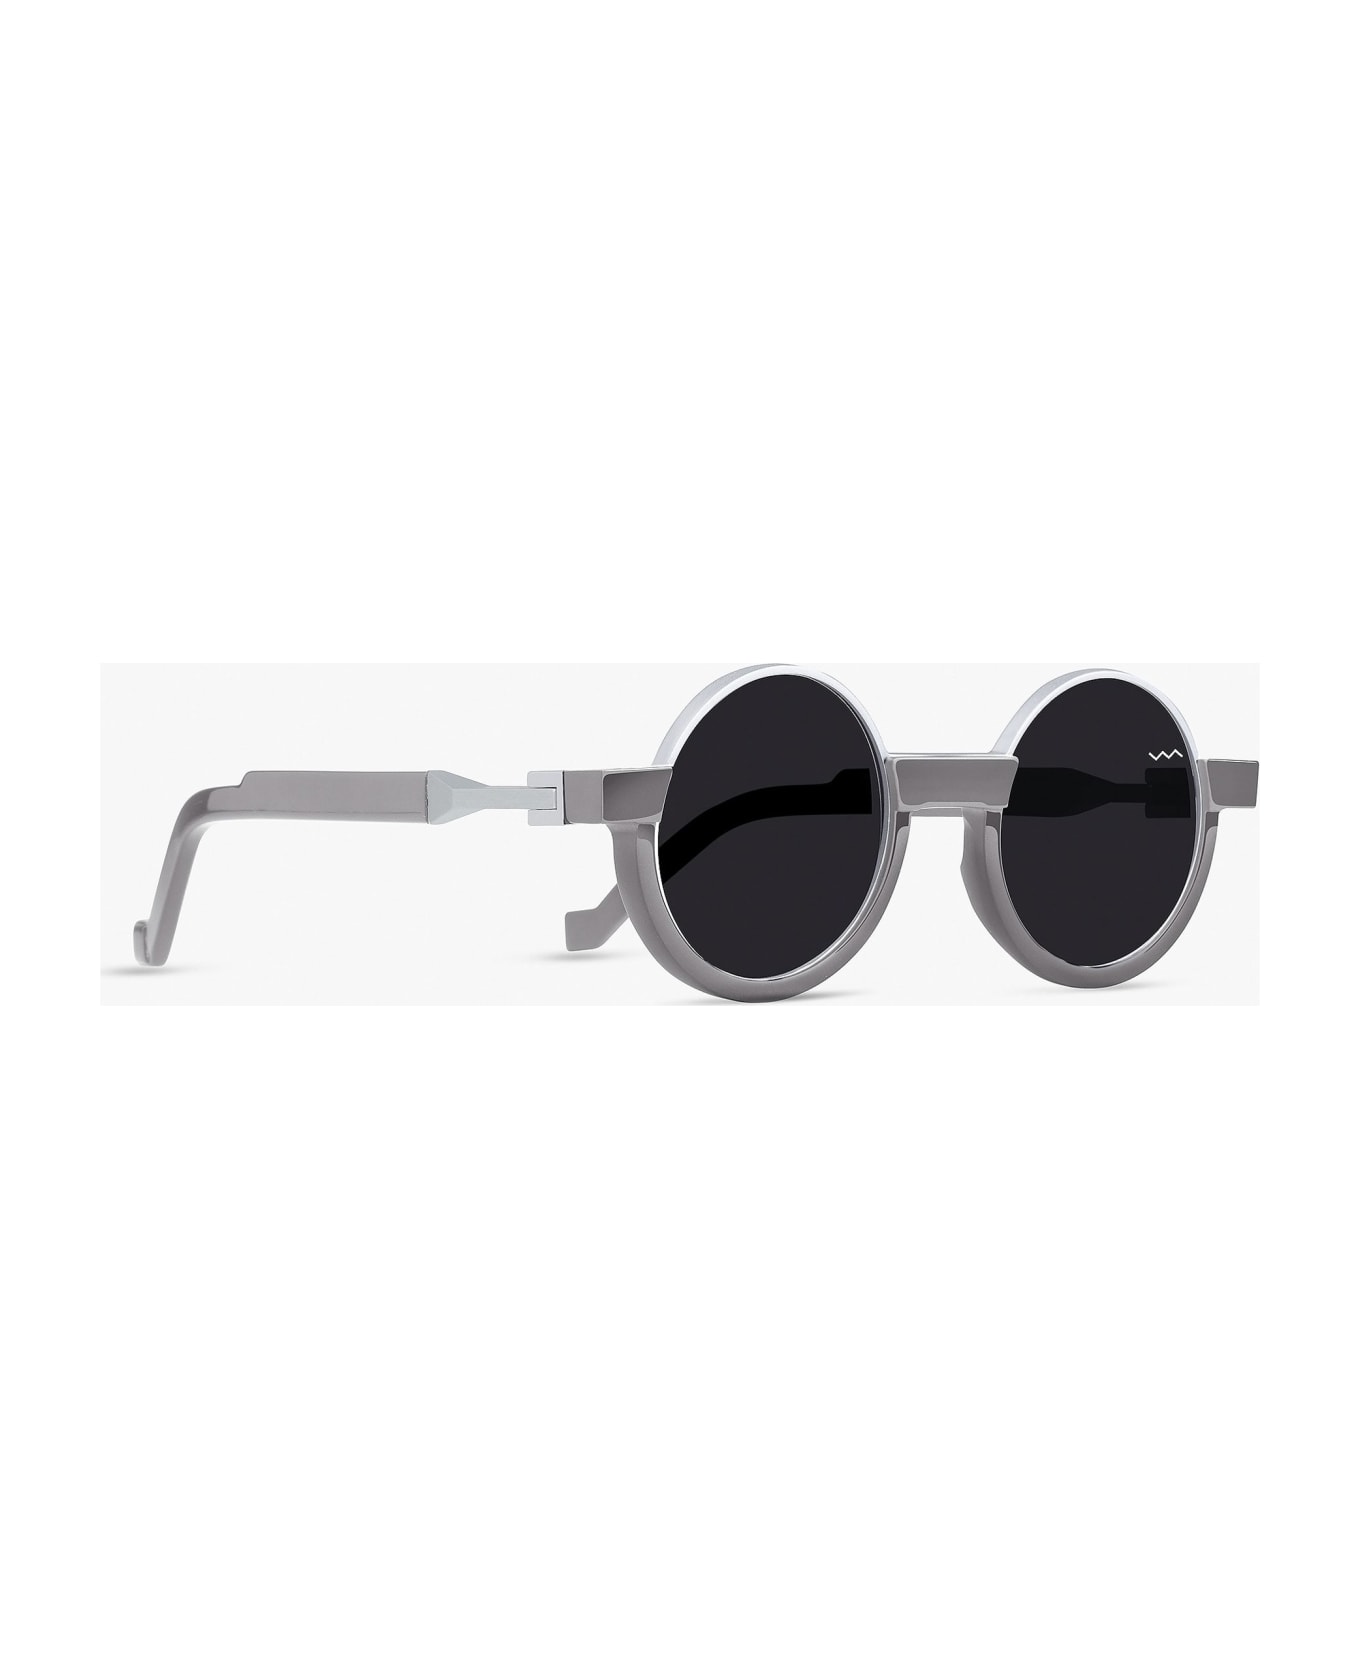 VAVA Cl0011 - Light Grey Sunglasses - light grey